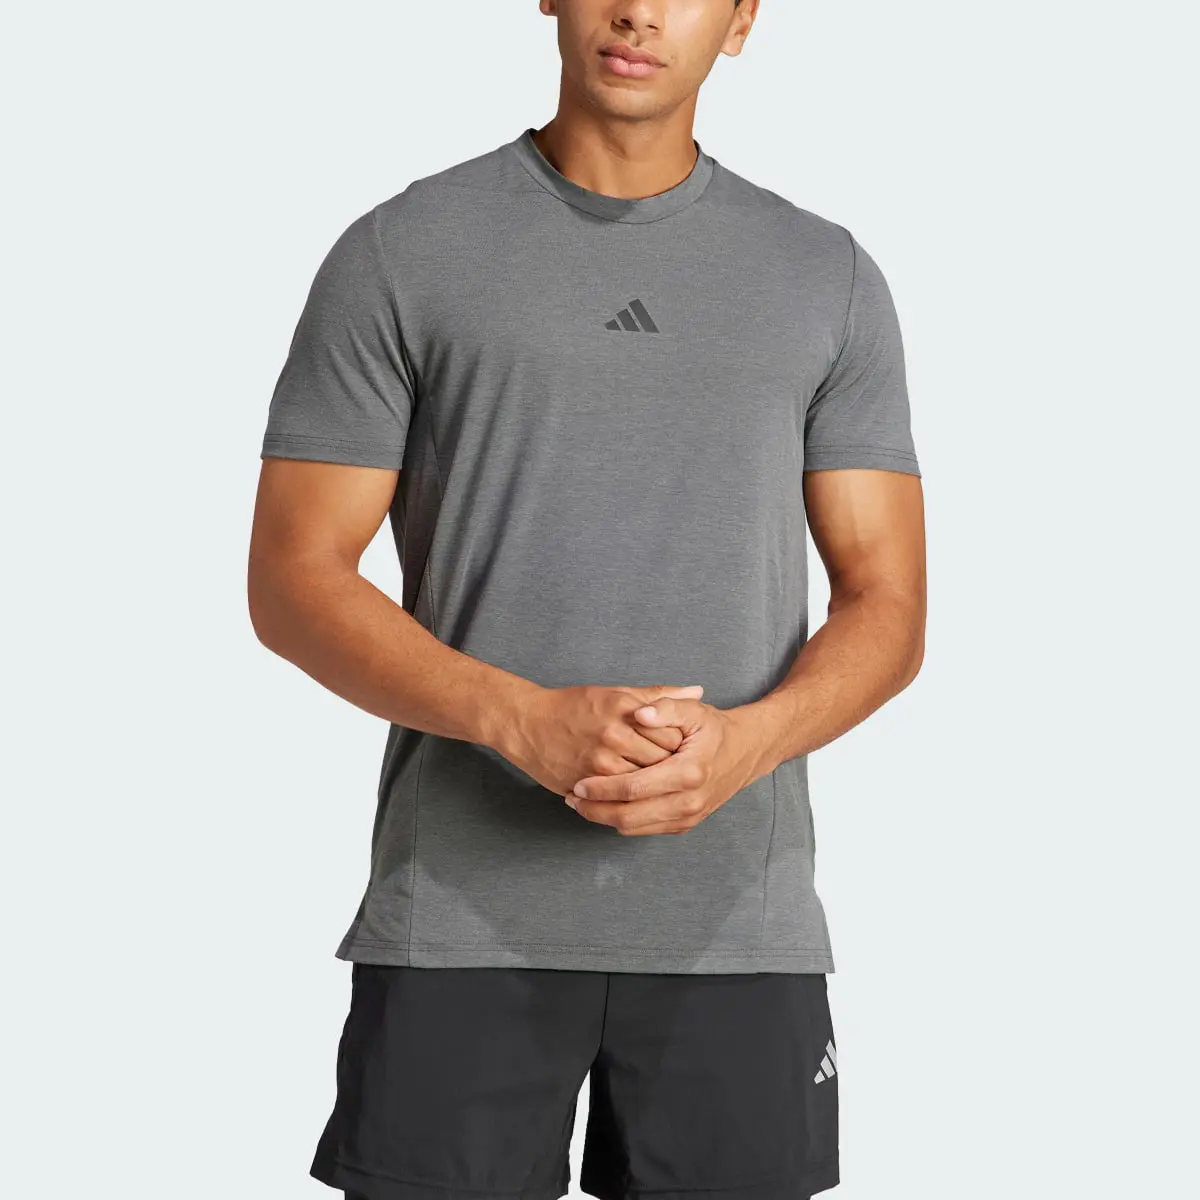 Adidas T-shirt Designed for Training Workout. 1